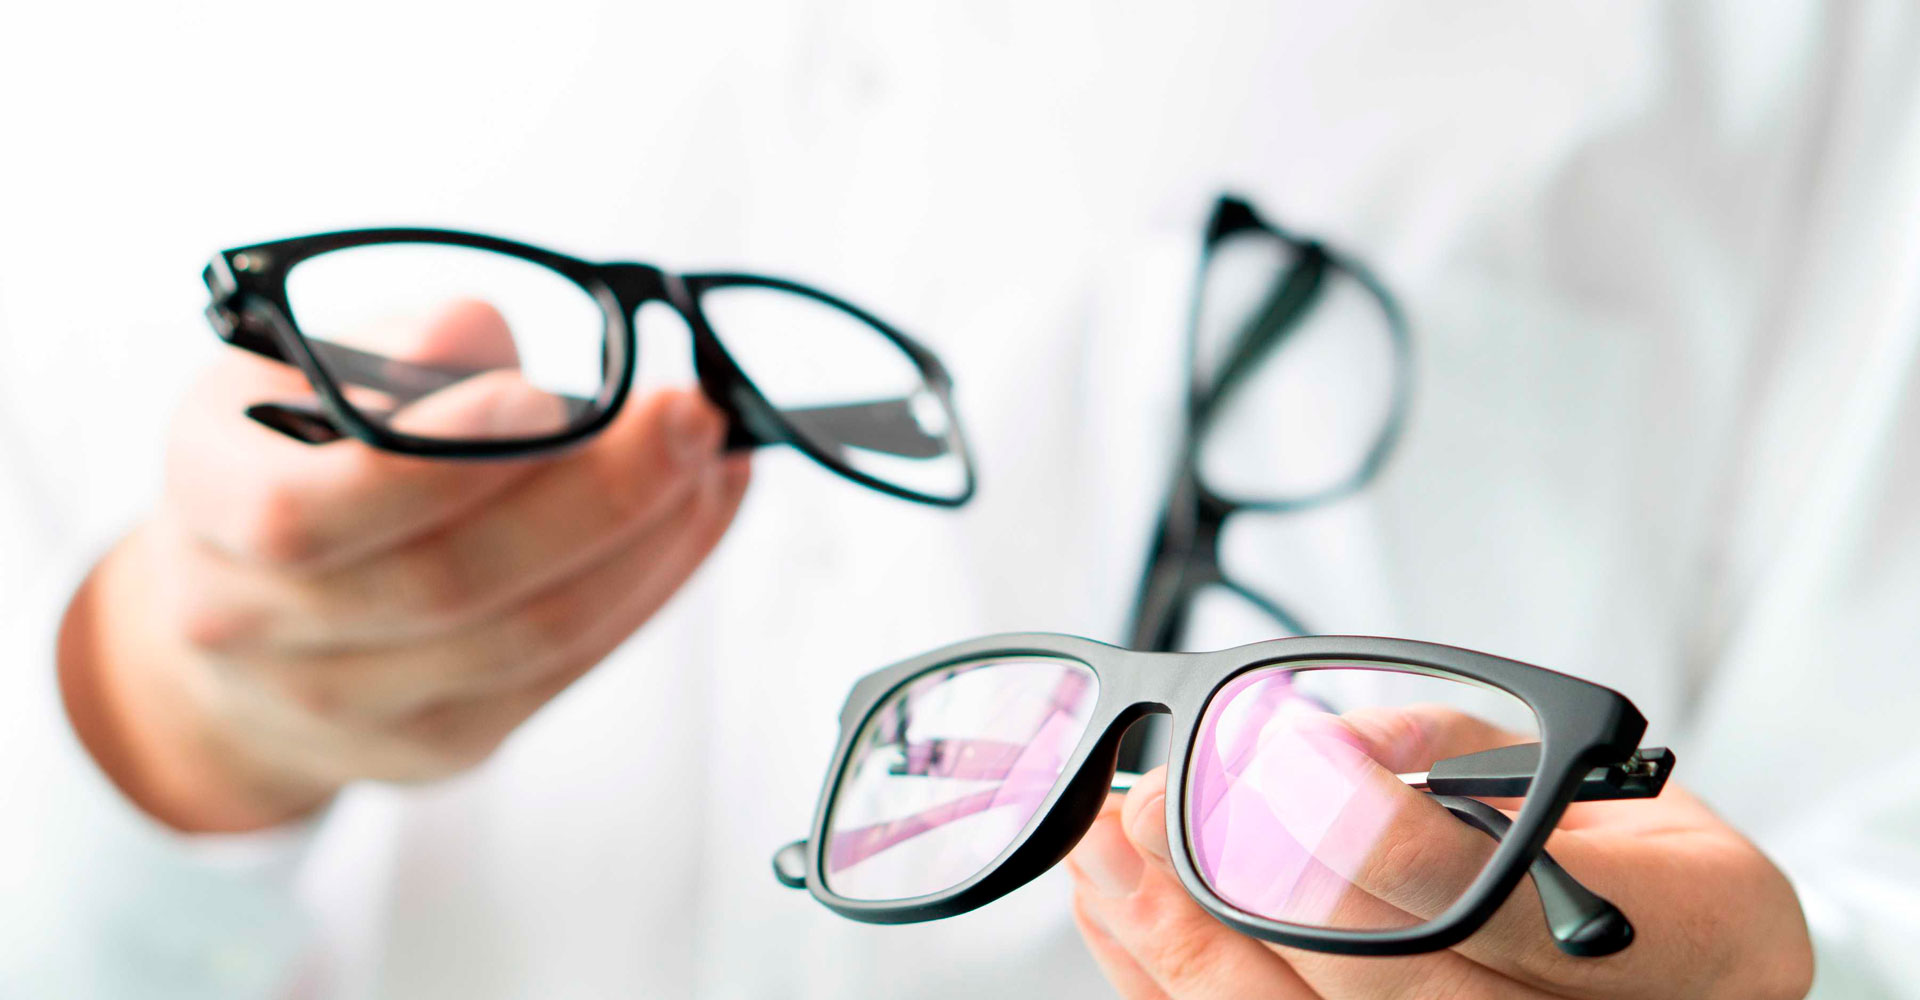 T me best glass. Очки для зрения. Очки офтальмолога. Оправа для линз. Вторые очки.